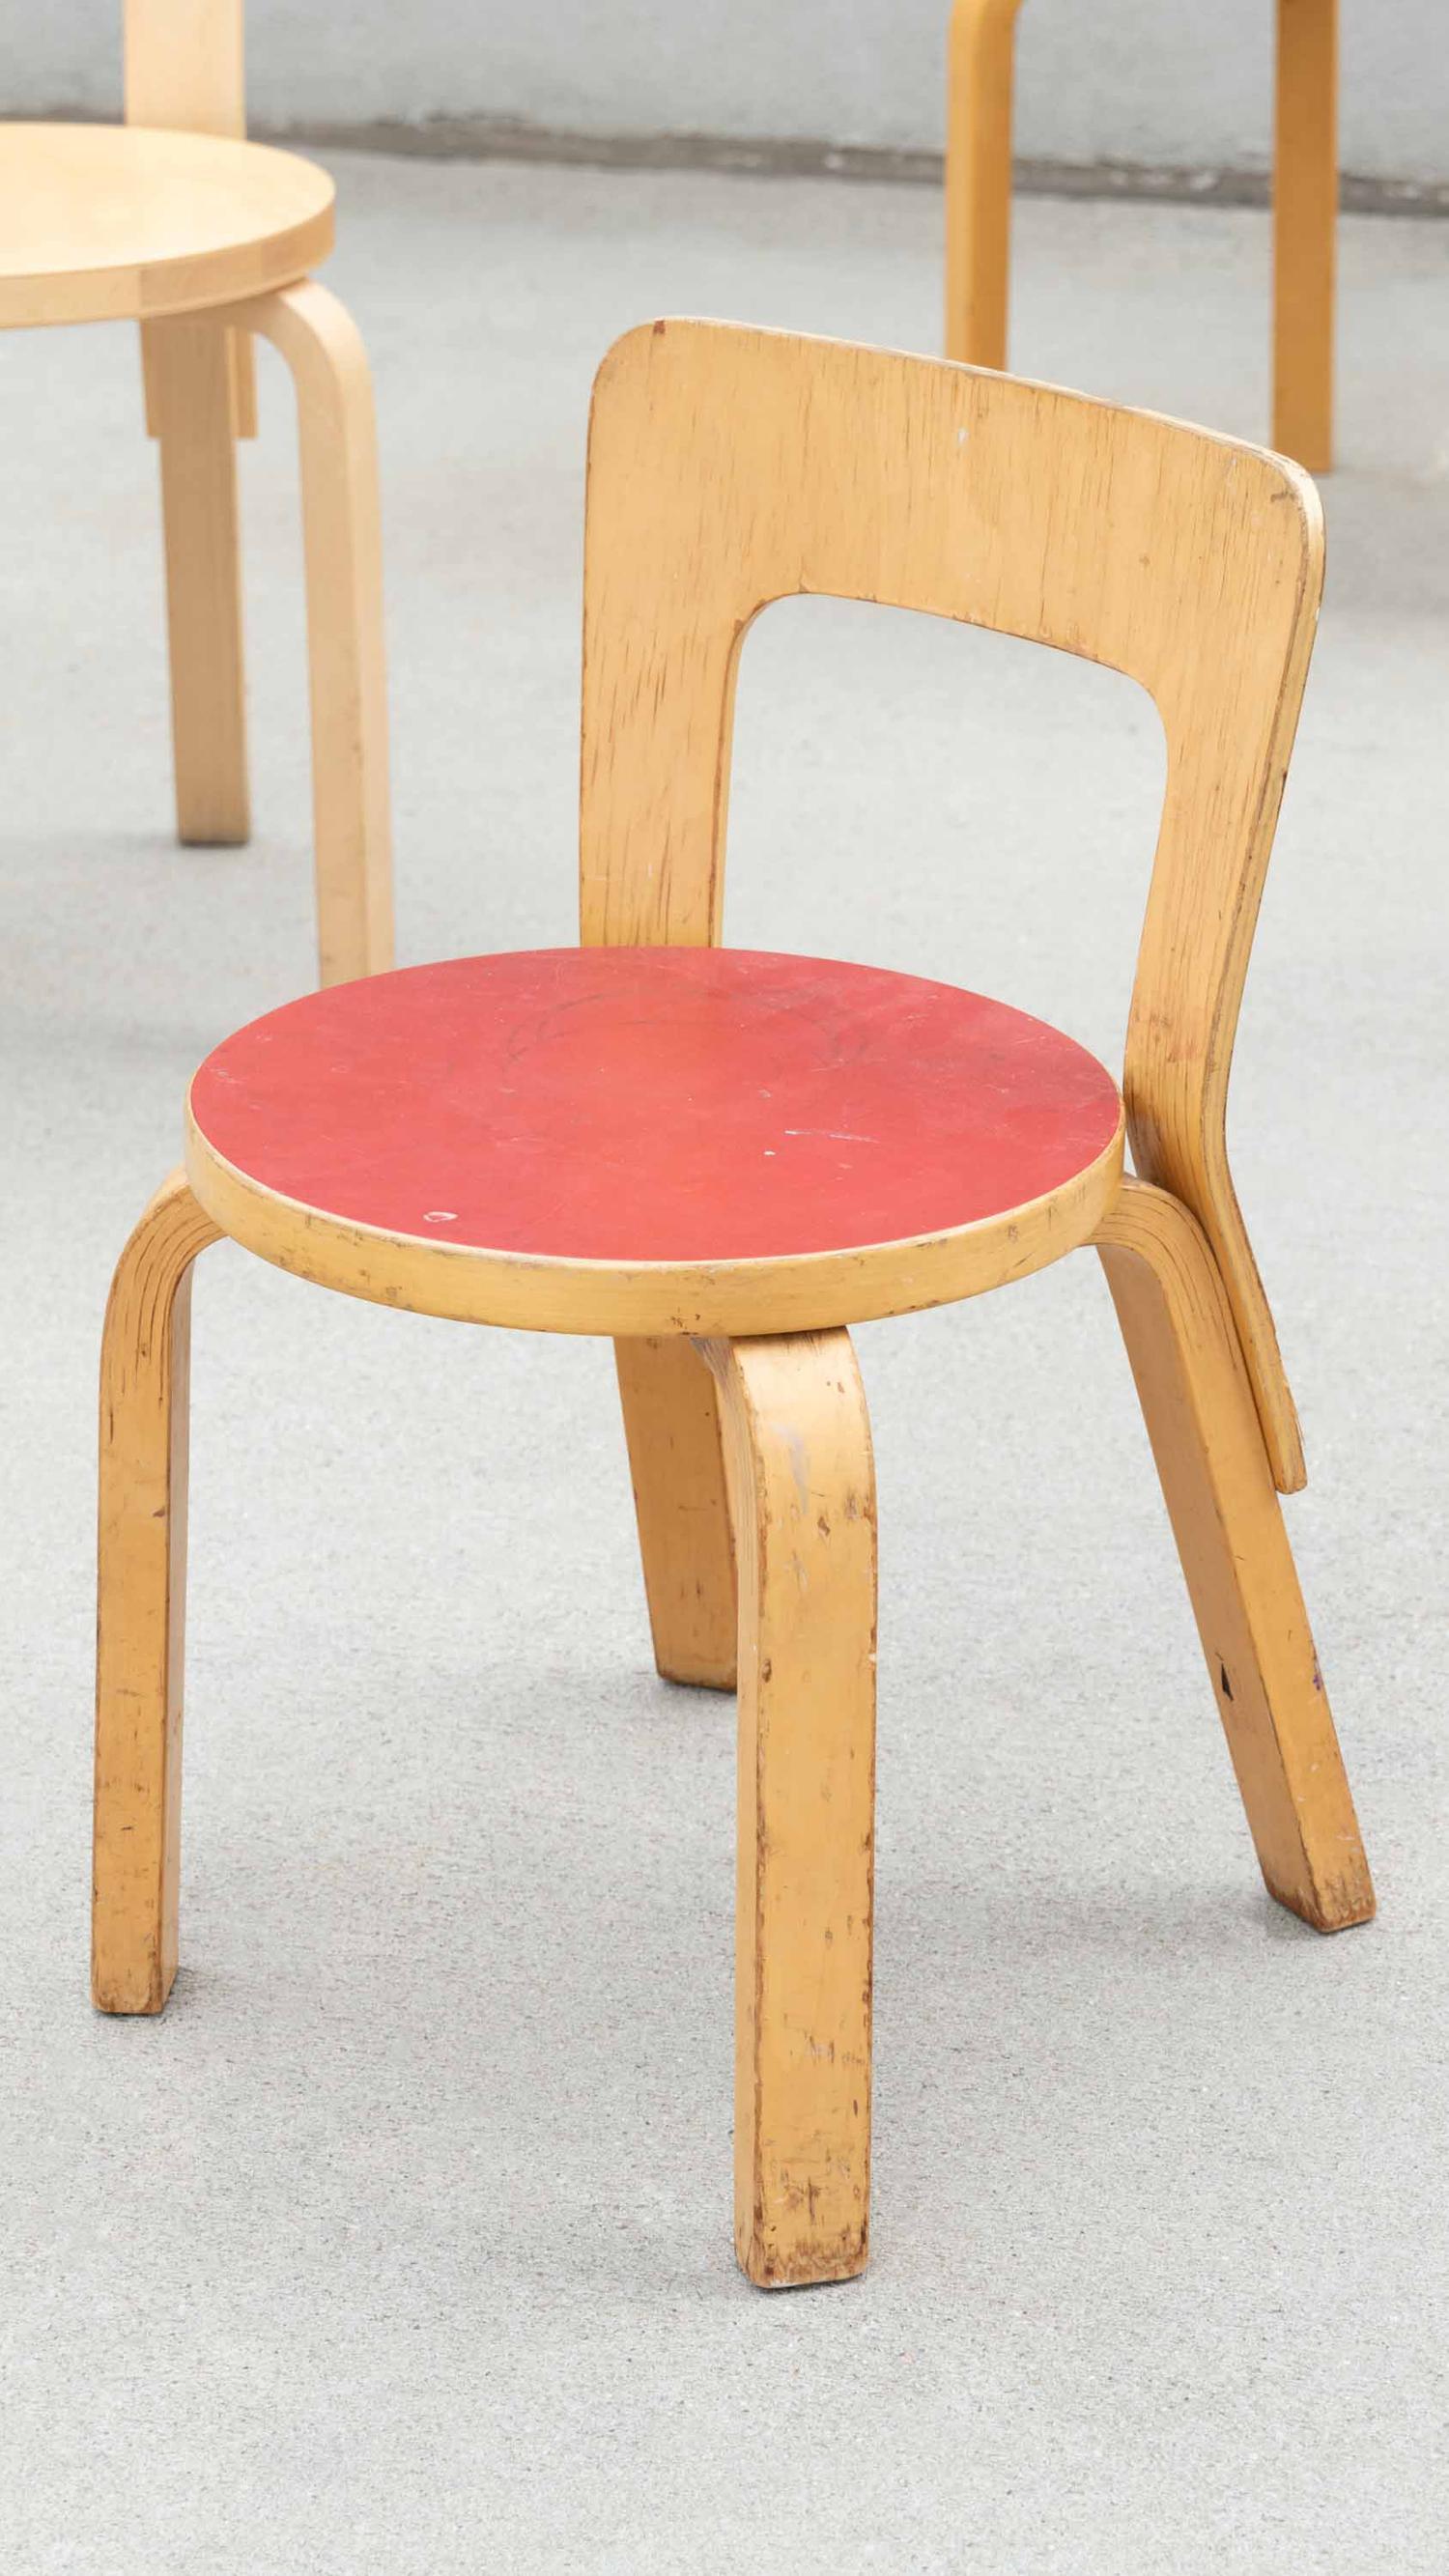 Finnish Pair of Alvar Aalto chair N65 by Artek with red linoleum seats c.1950s